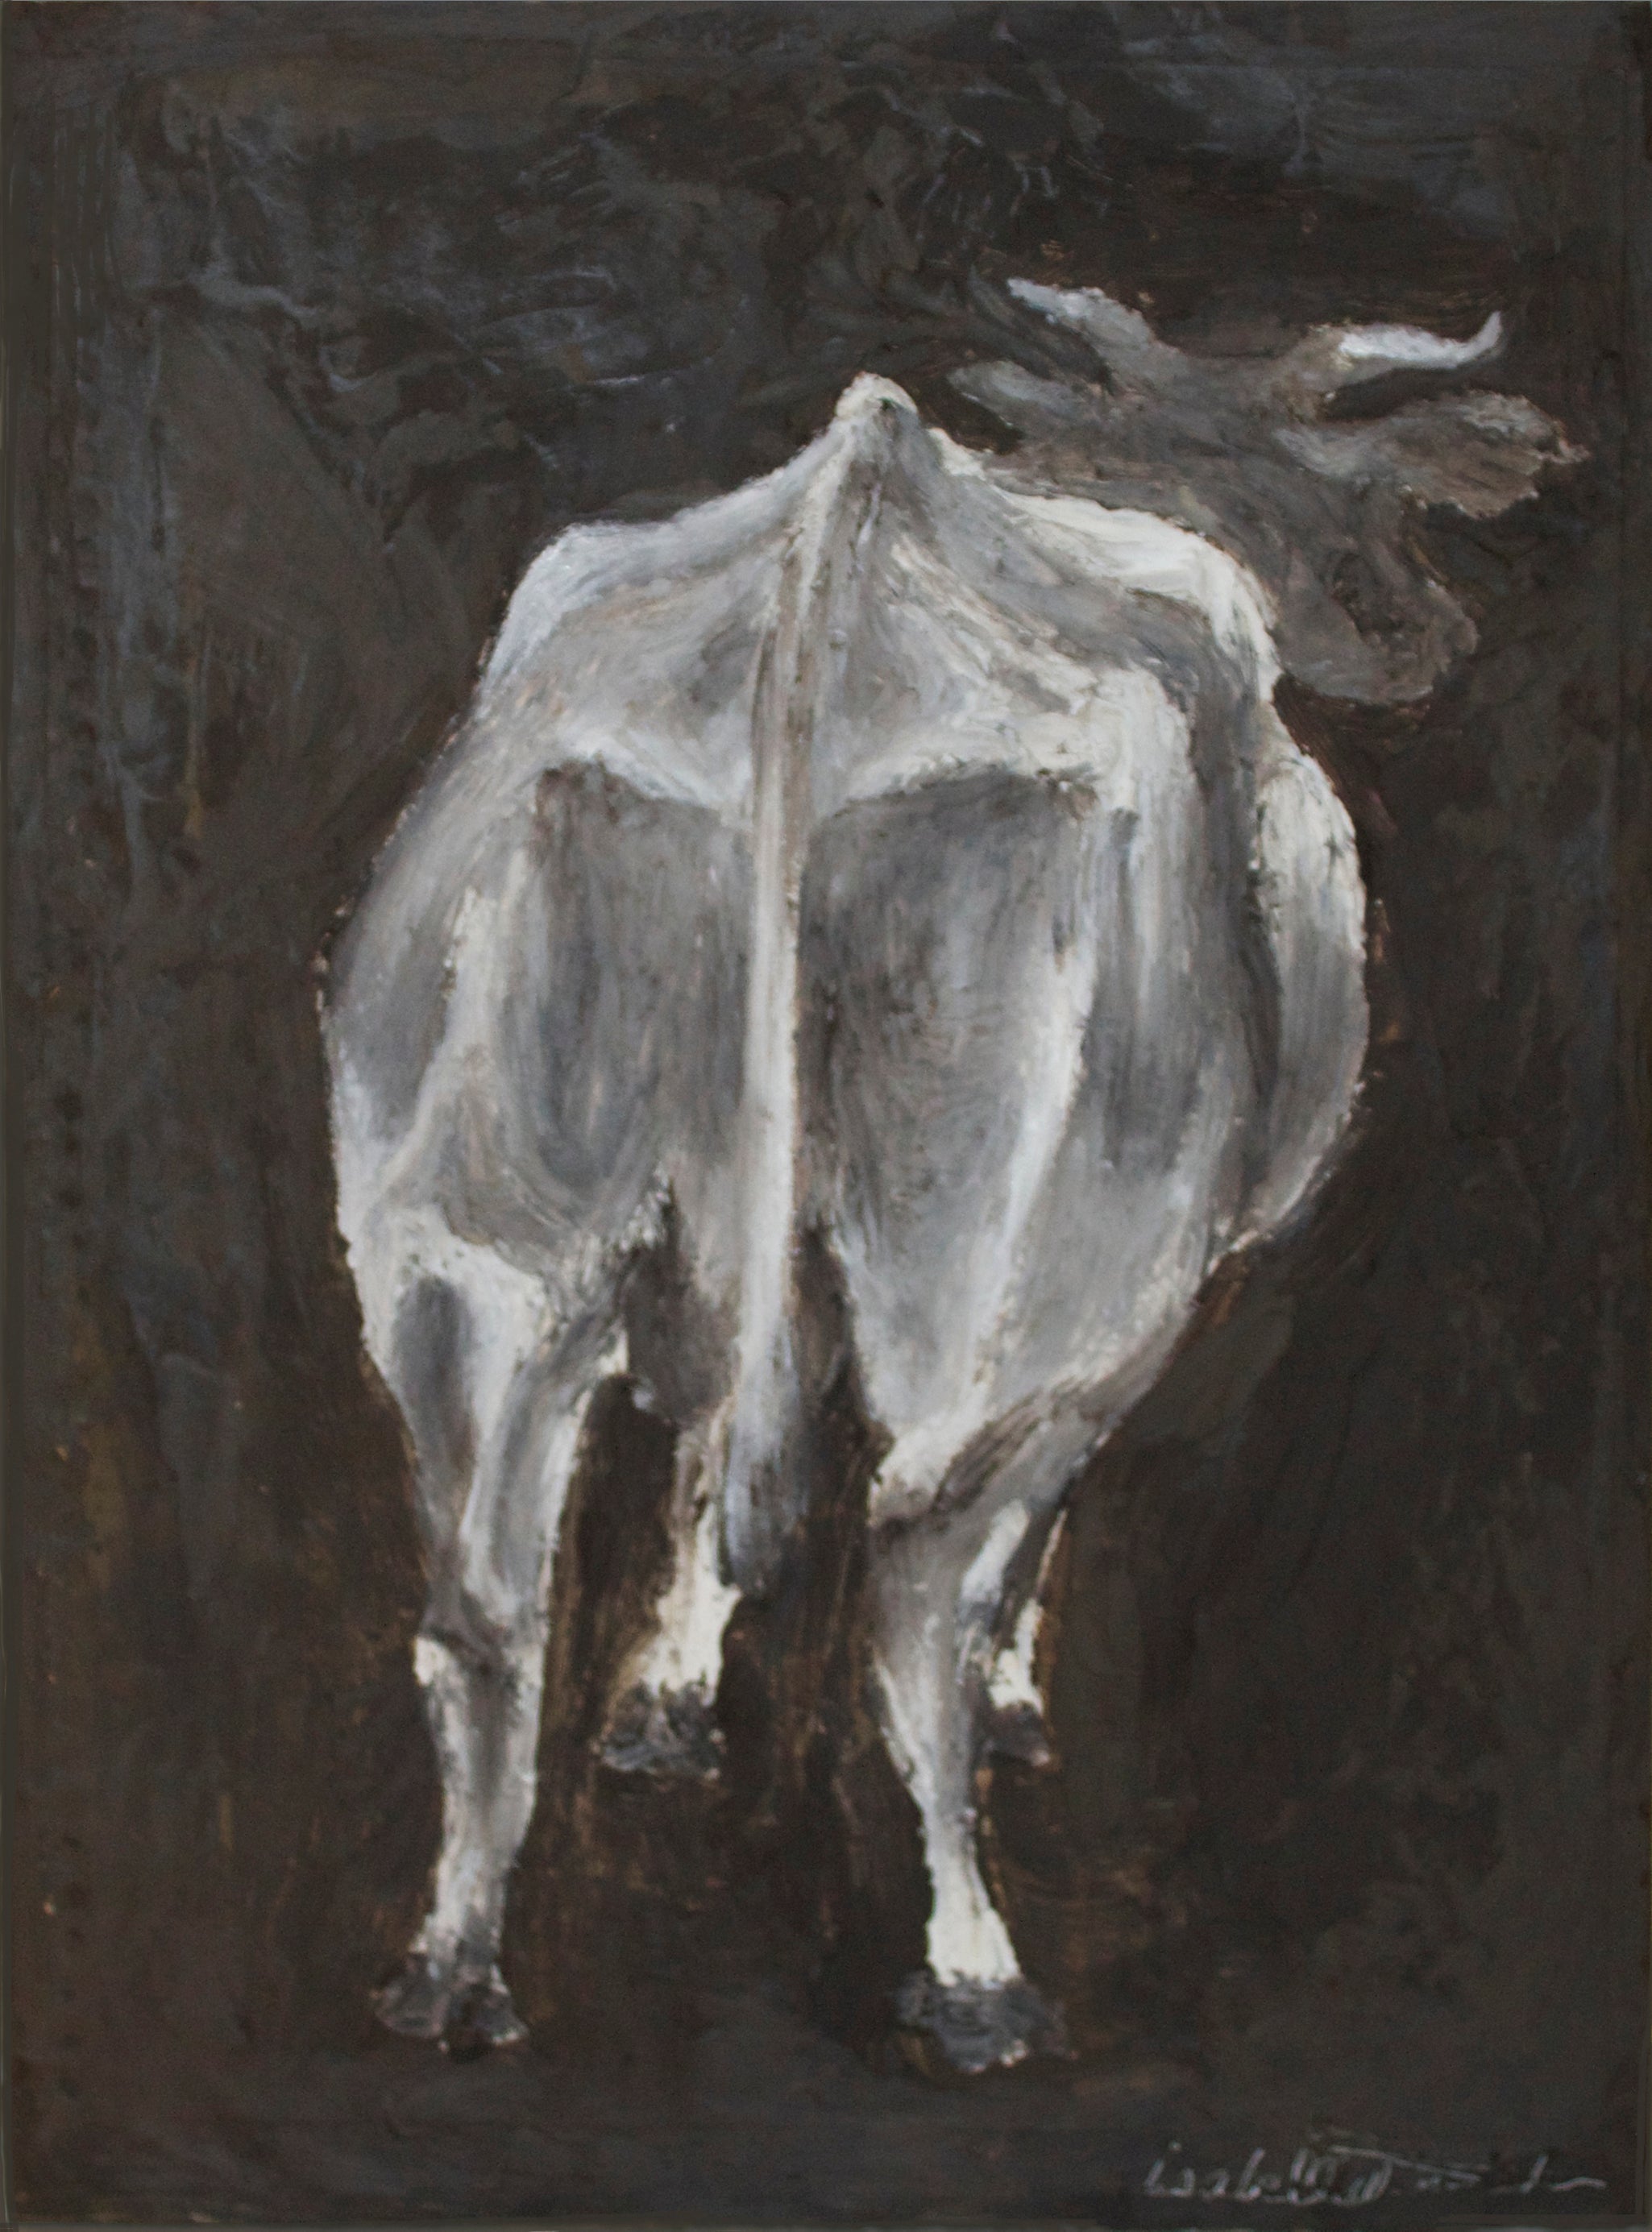 Cow Study Back-Facing View, retouched original canvas print